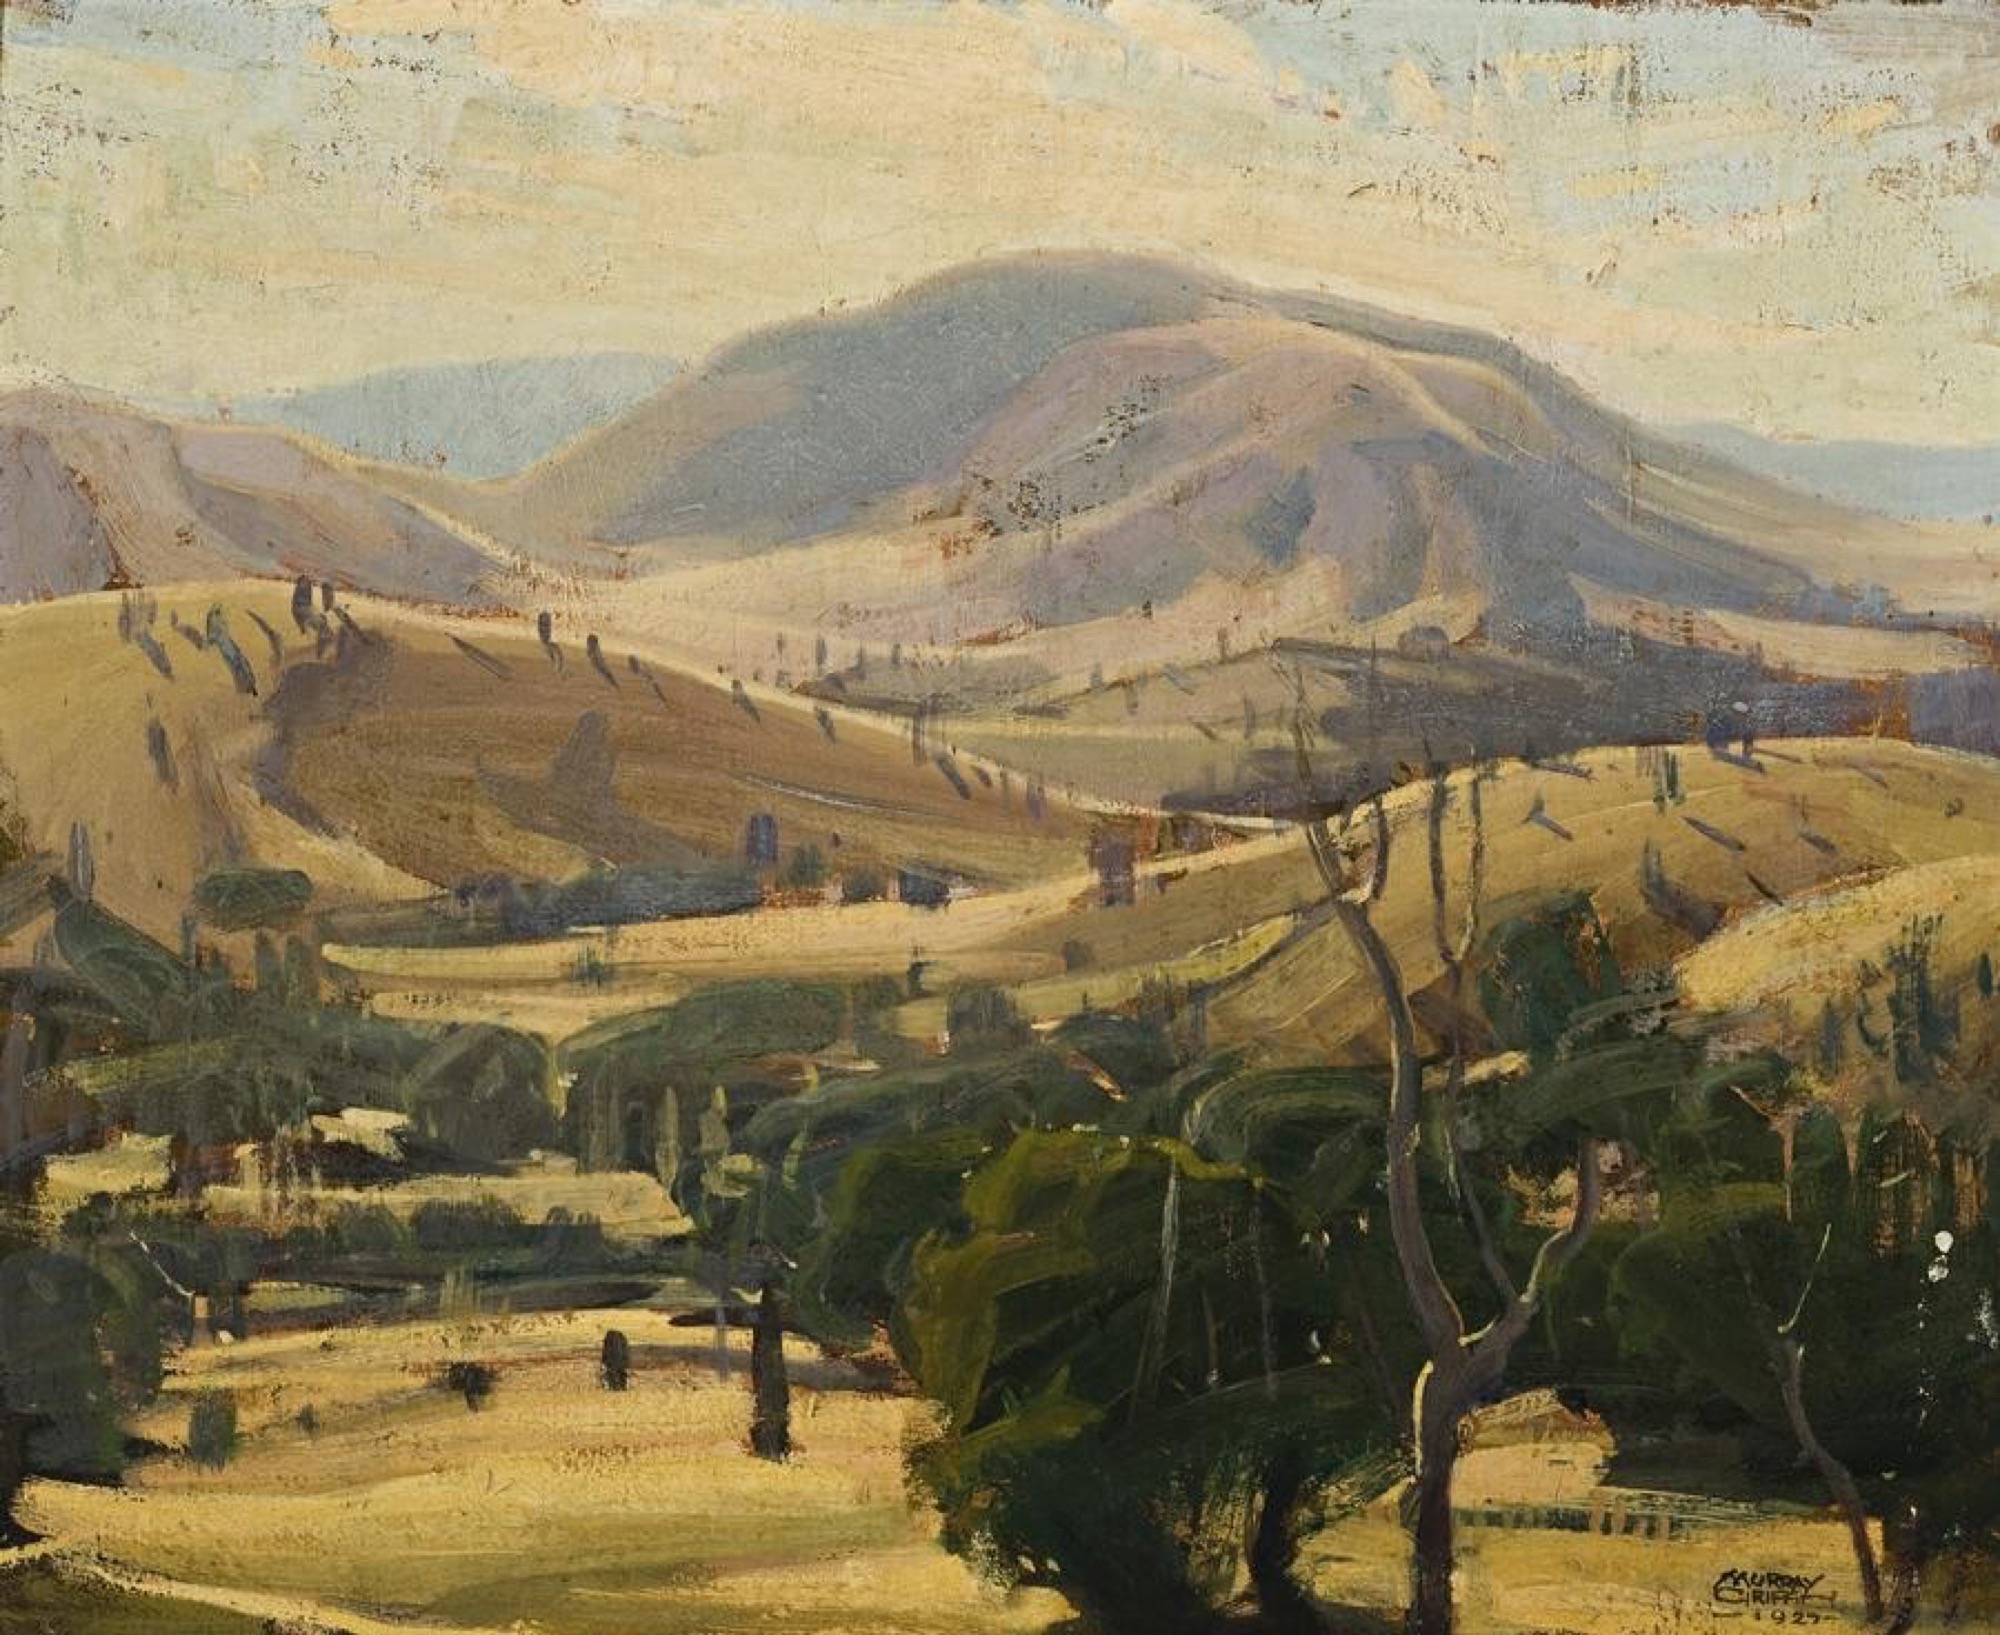 Murray Griffin, <em>Landscape</em>, 1927, oil on canvas 46.0 x 56.0 cm. Photo courtesy Deutscher and Hackett.